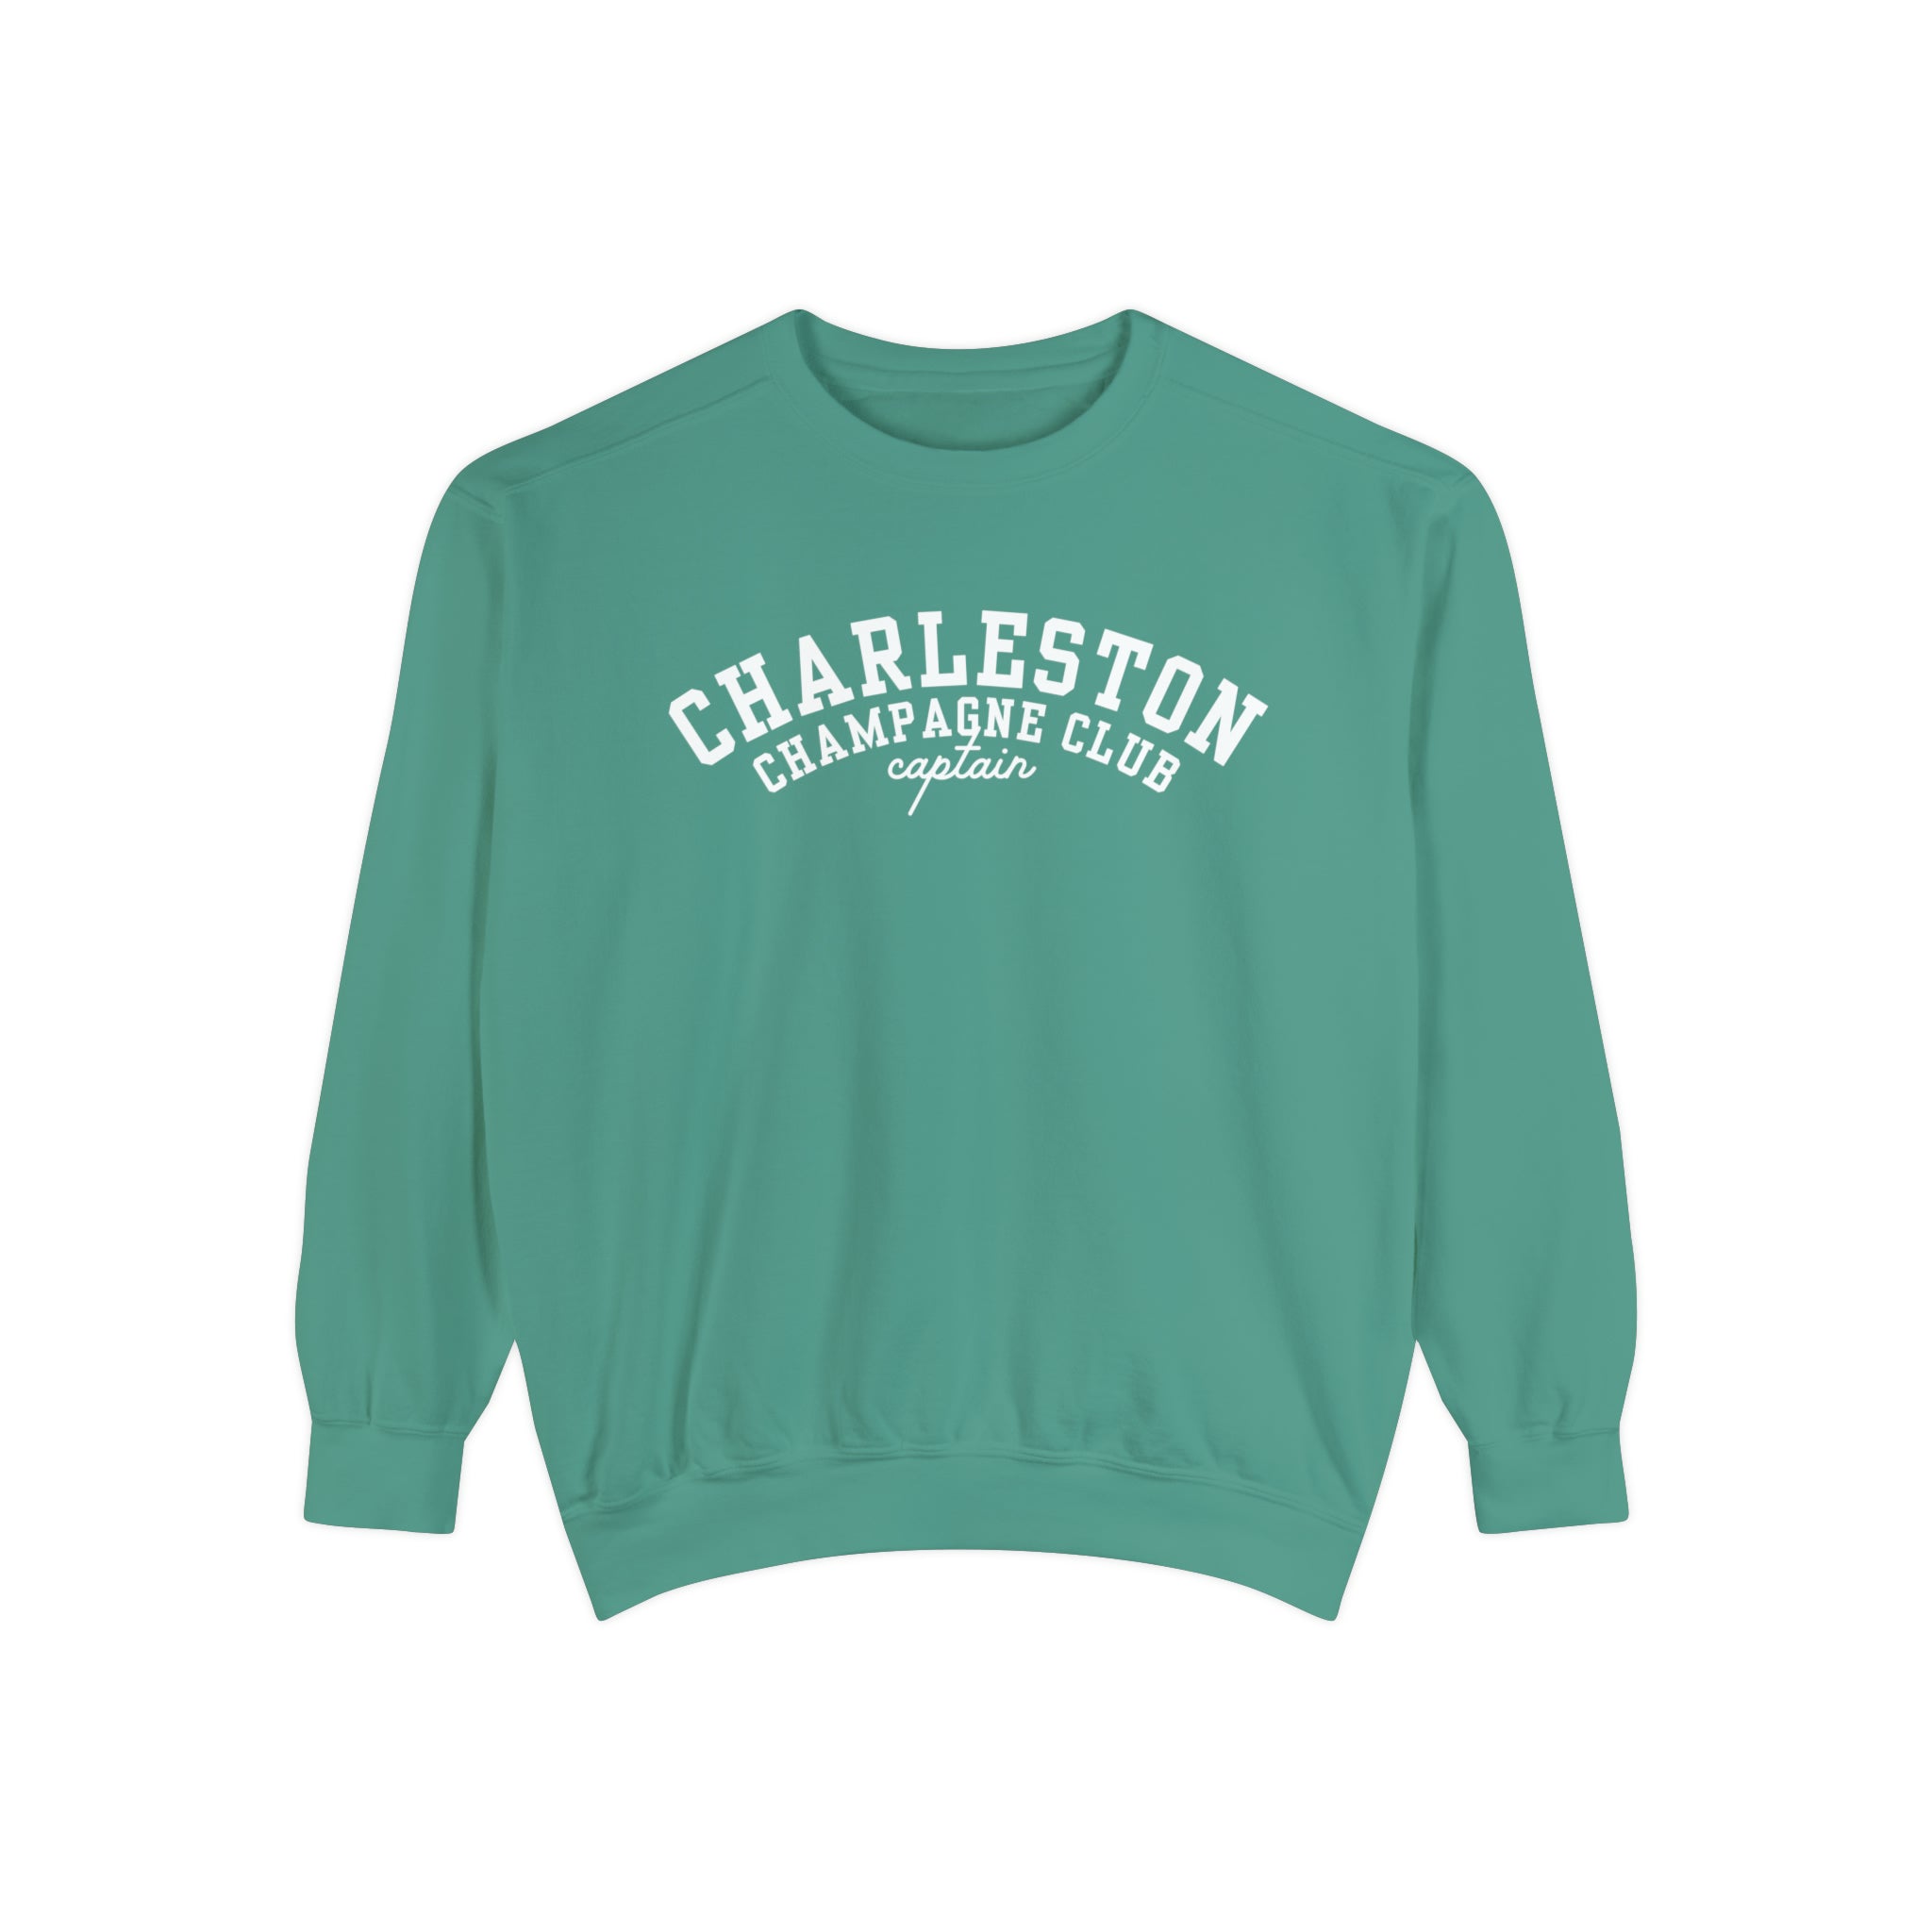 Charleston Champagne Club Comfort Colors Crewneck Sweatshirt